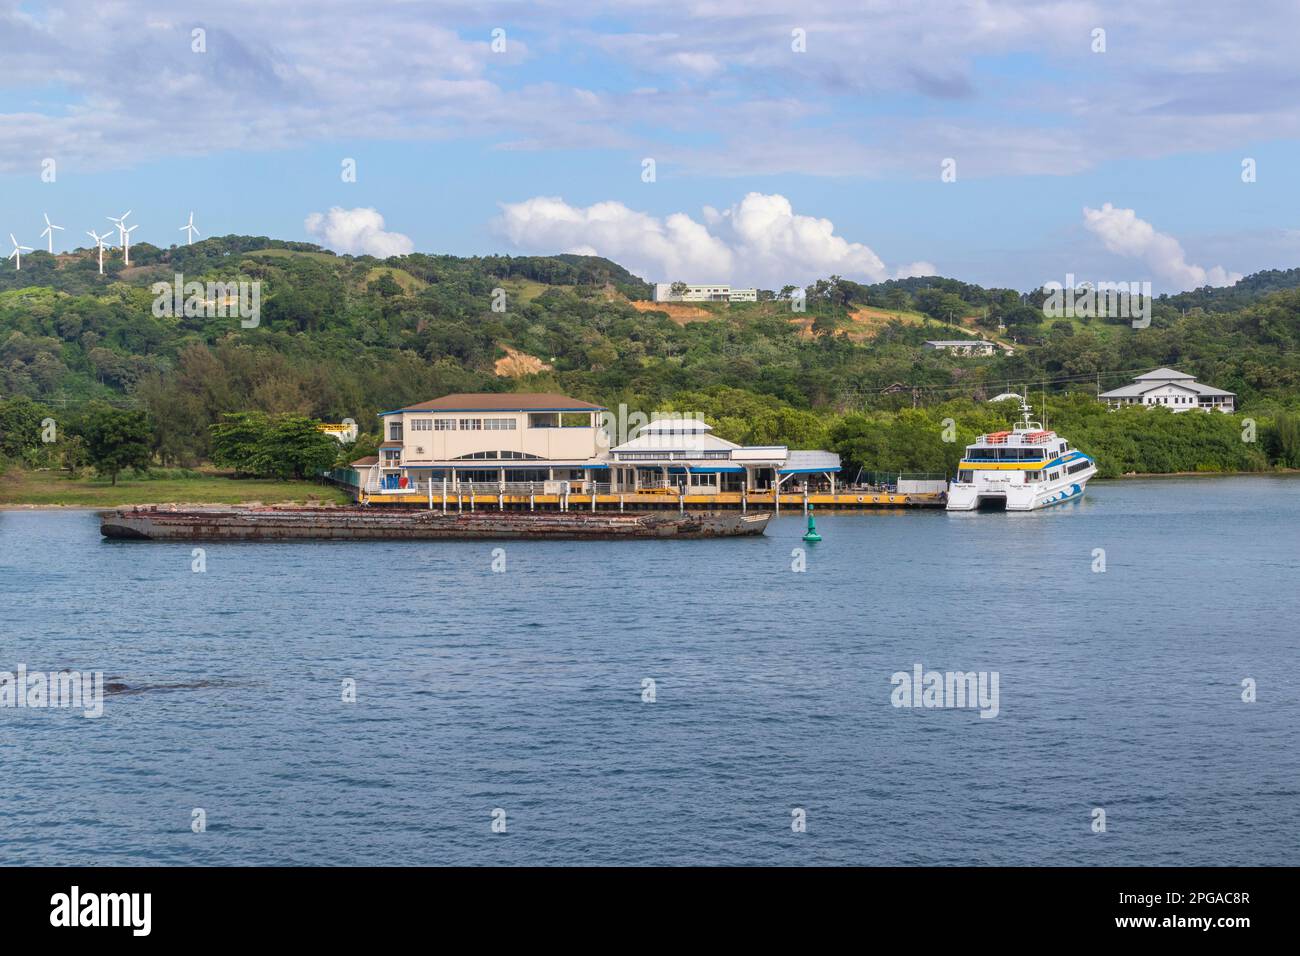 Roatan Honduras Cruise Port and Tourist Destination - Safeway Maritime Transportation Ferry. Stock Photo